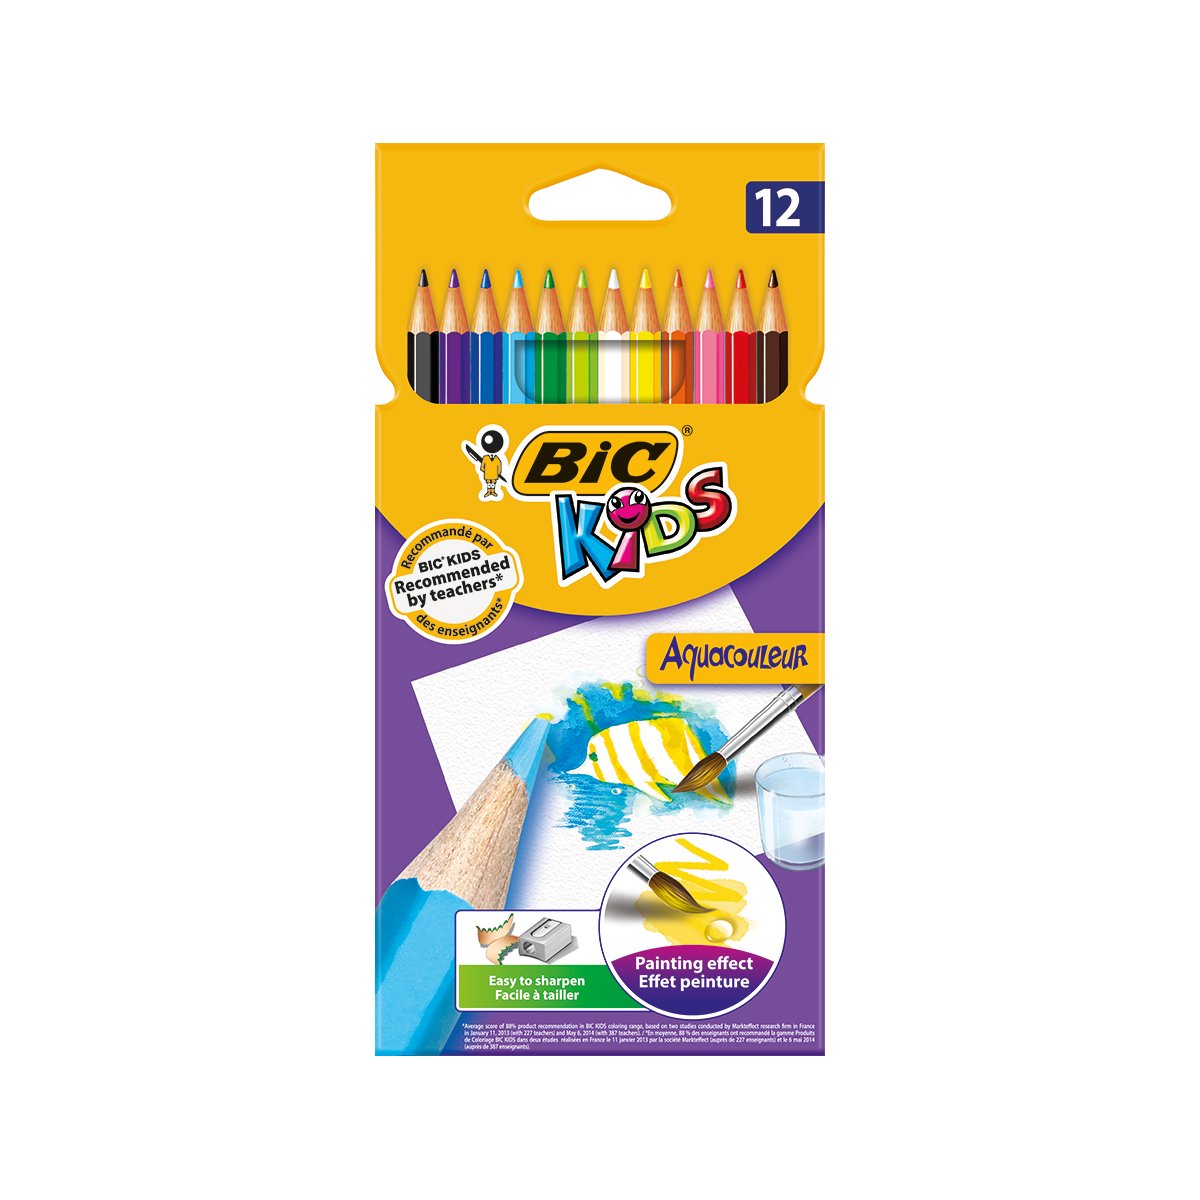 Set creioane colorate Aquacouleur Bic, P12 Bic